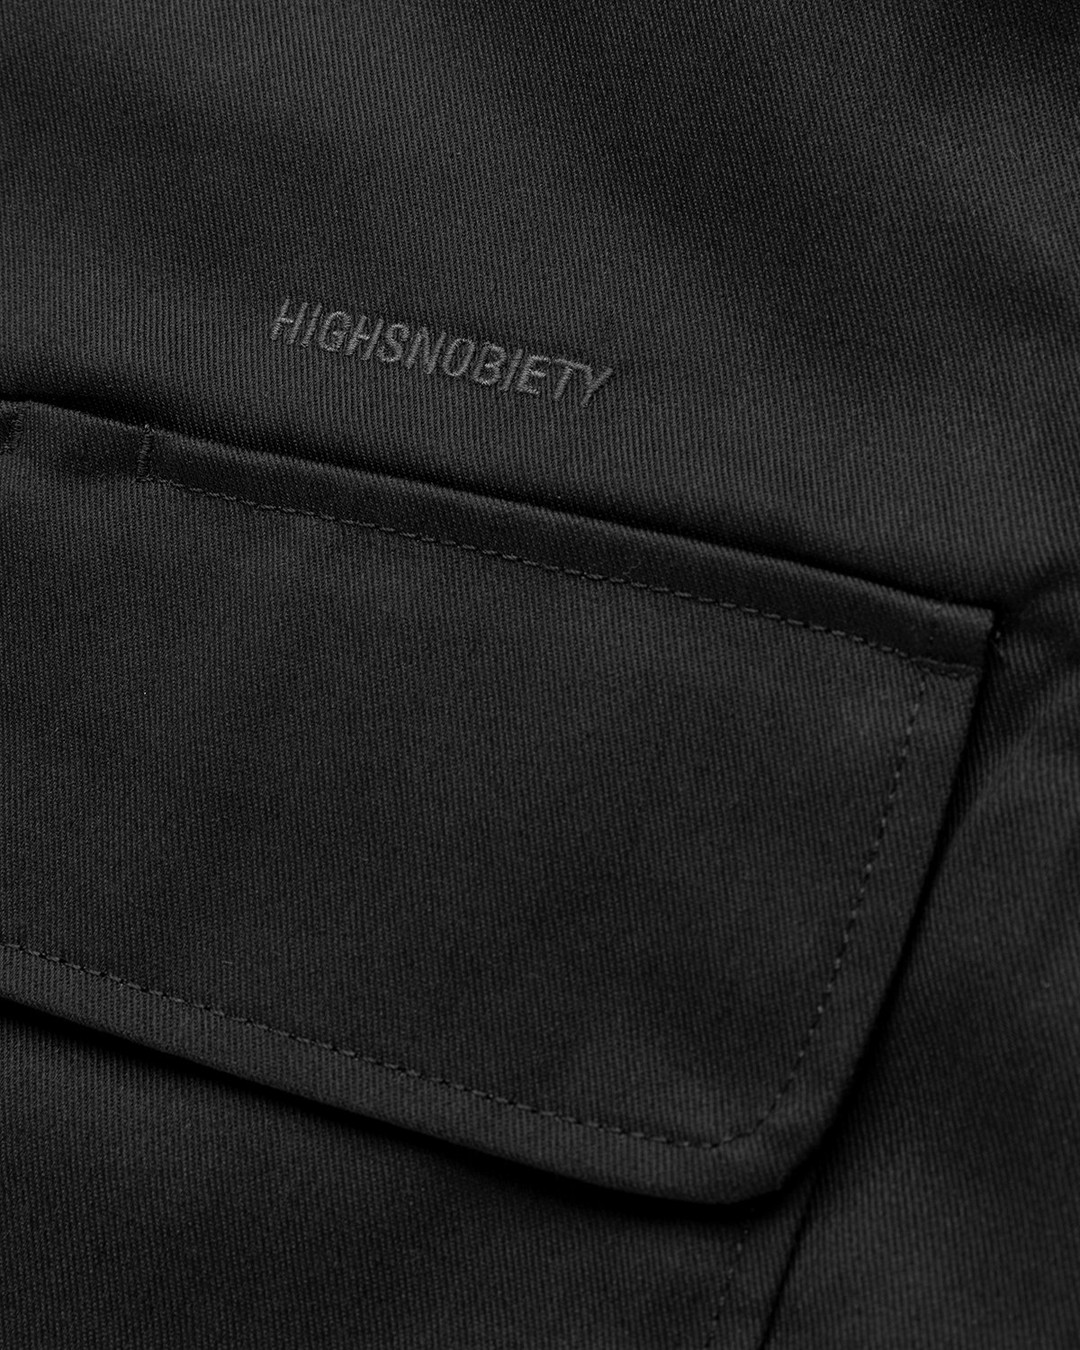 Highsnobiety x Dickies – Service Shirt Black - Shirts - Black - Image 5